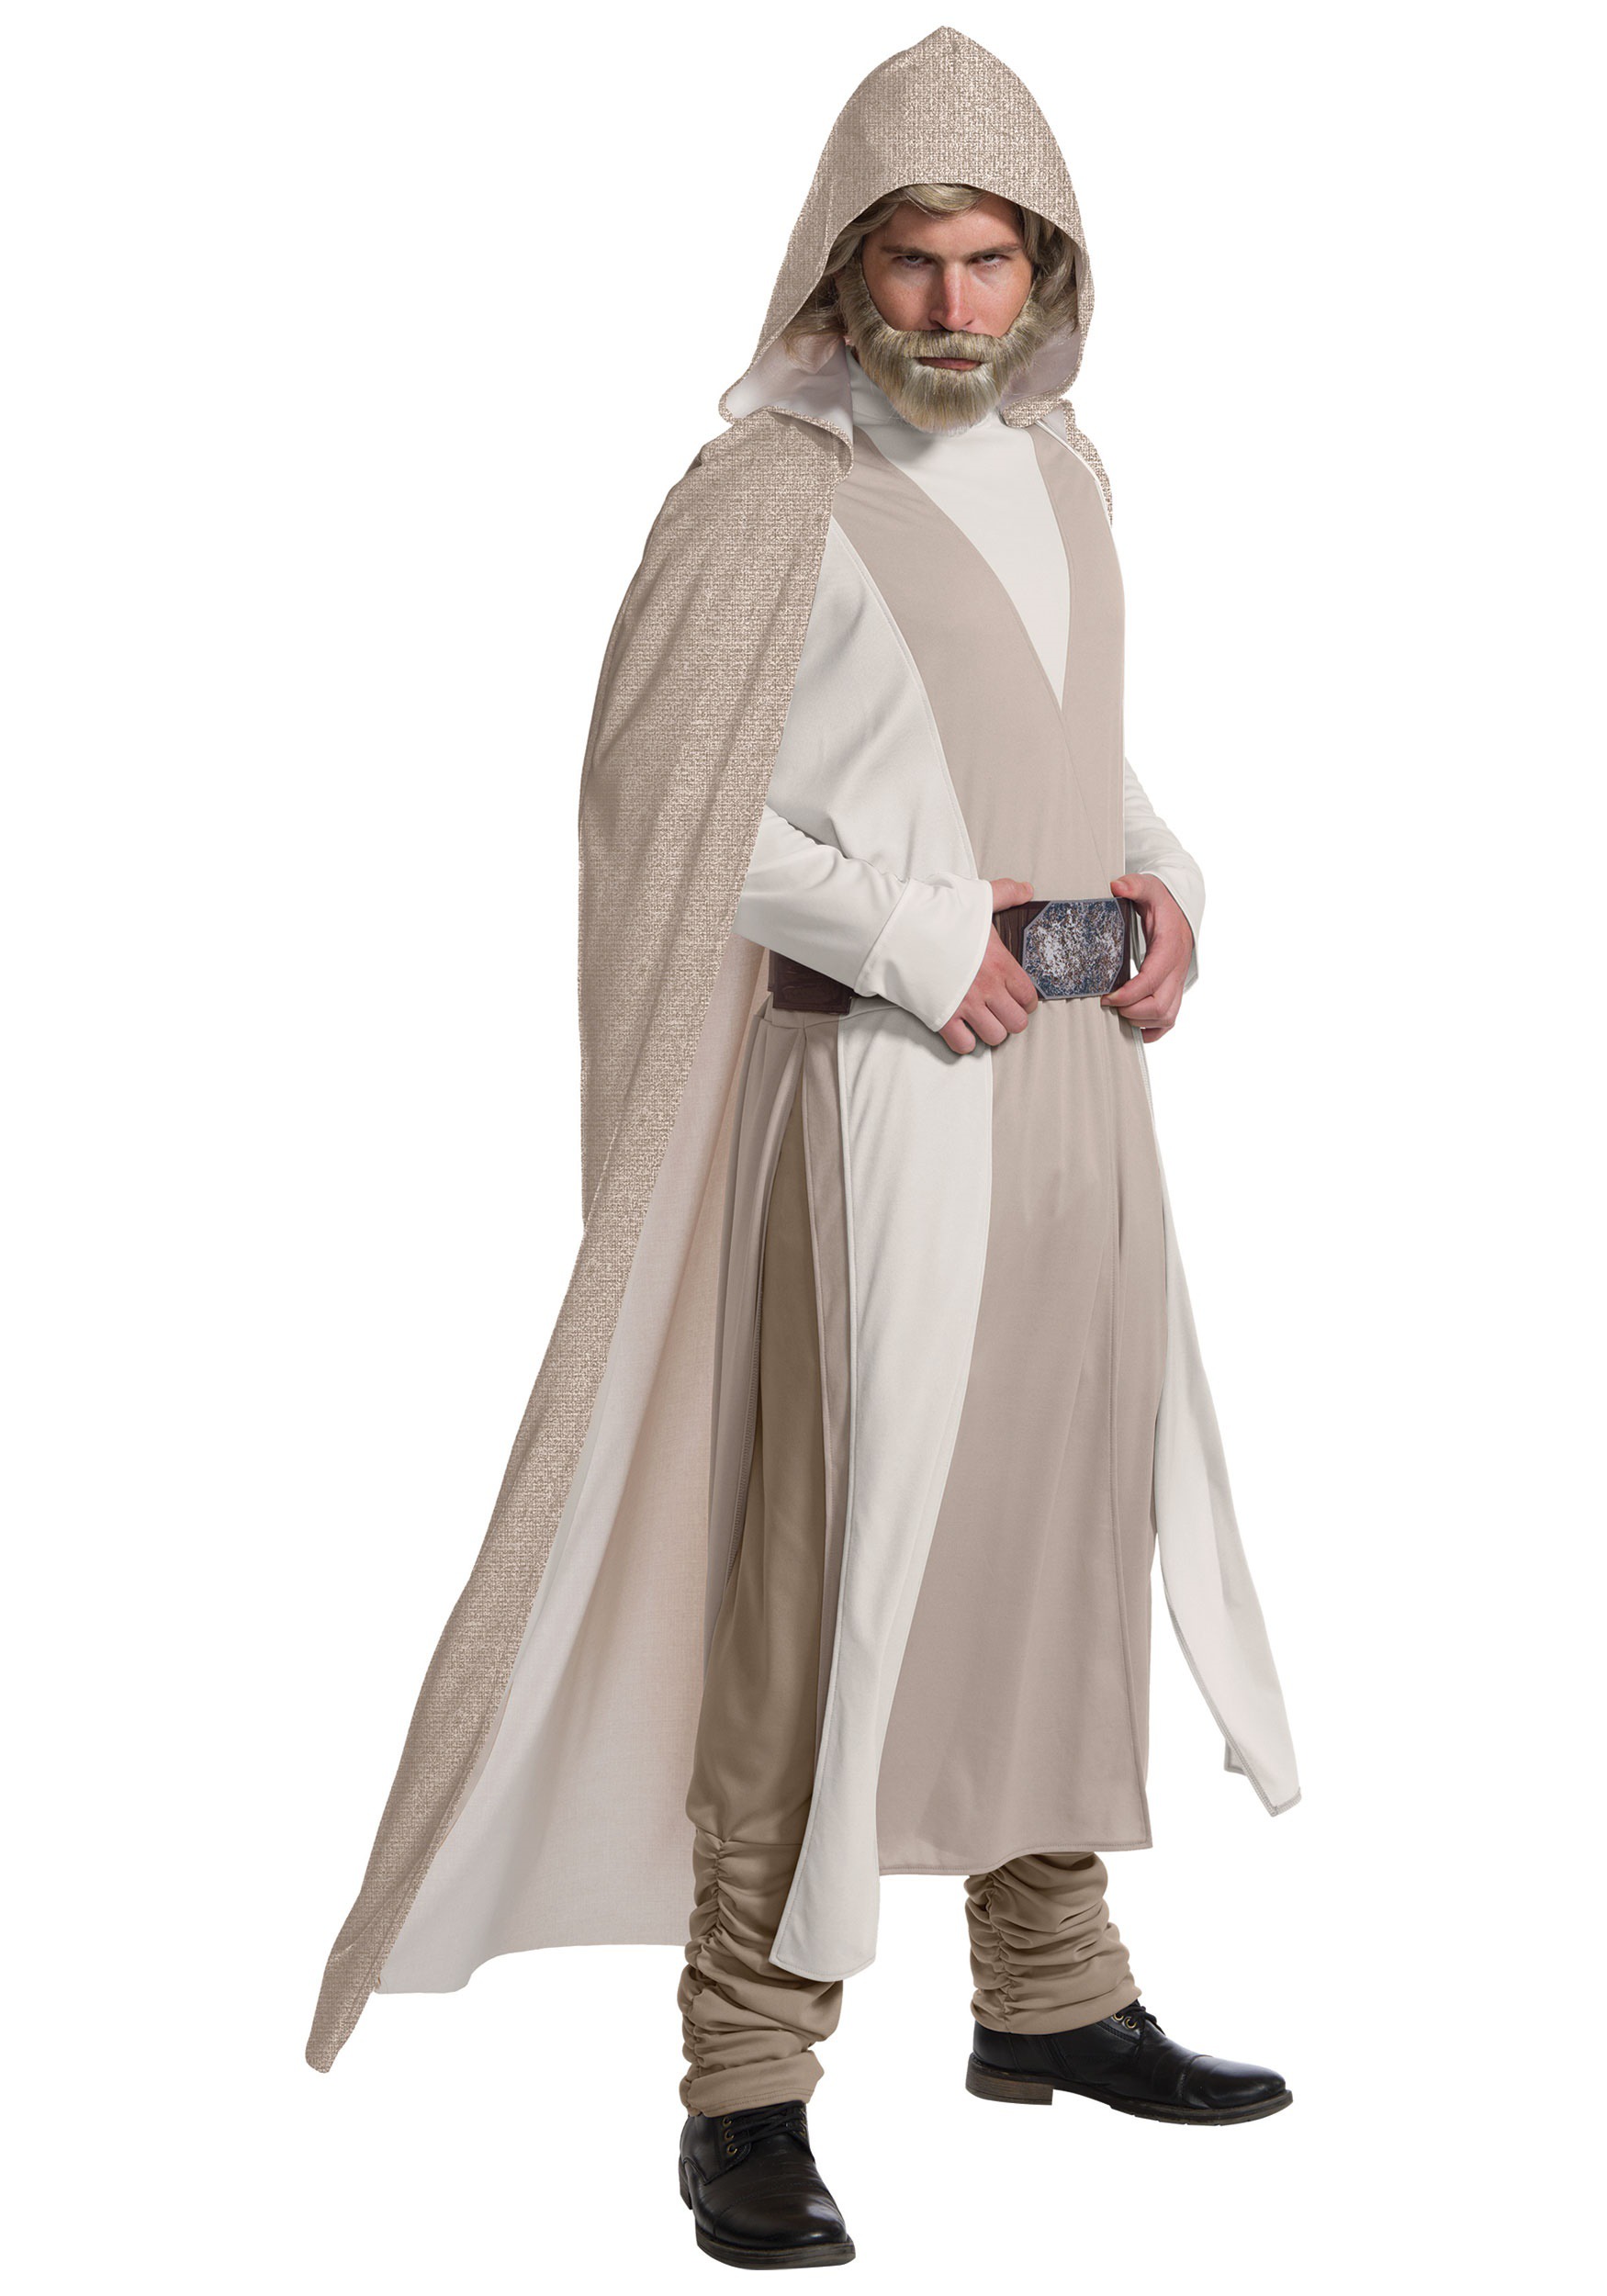 Star Wars The Last Jedi Deluxe Luke Skywalker Costume for Men